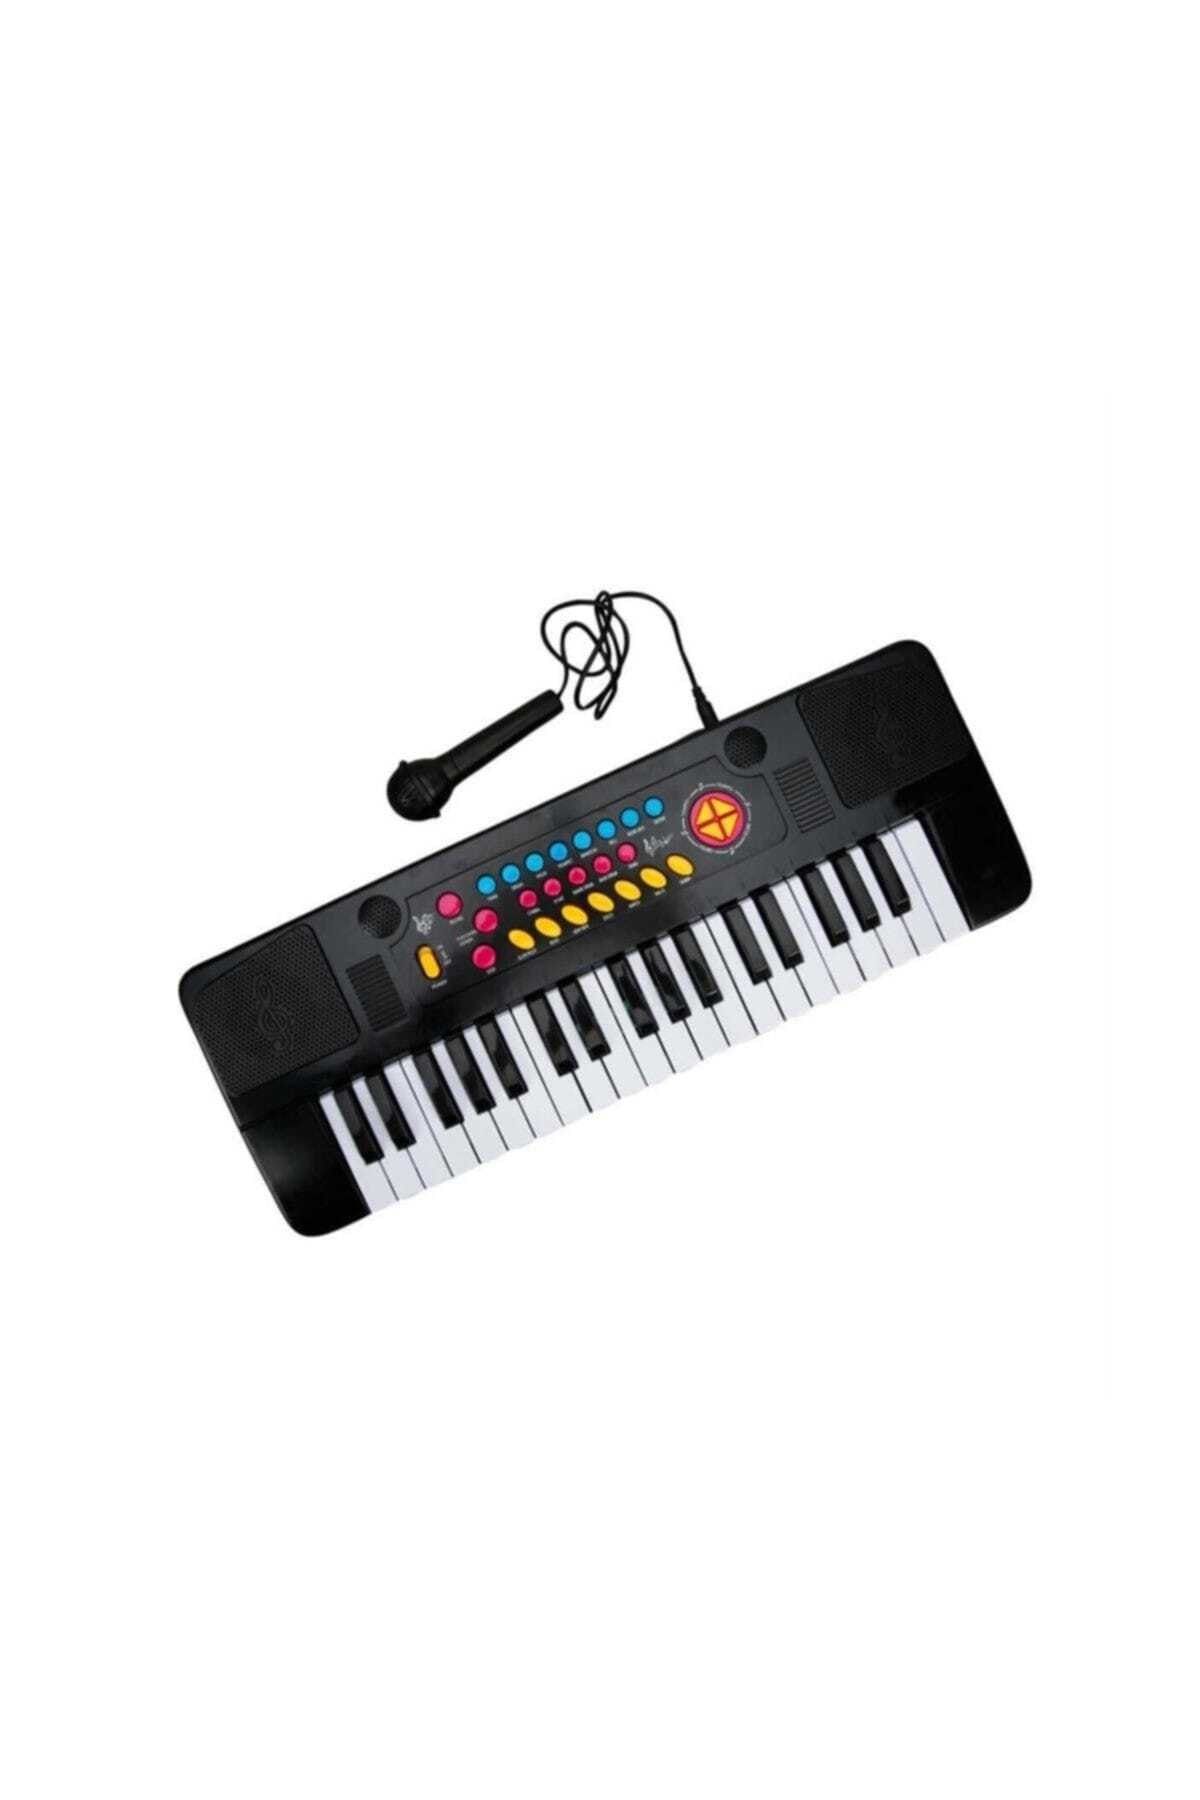 Anka Toyrosso Piyano 37 Tuşlu Elektronik Org Piyano Mikrofonlu